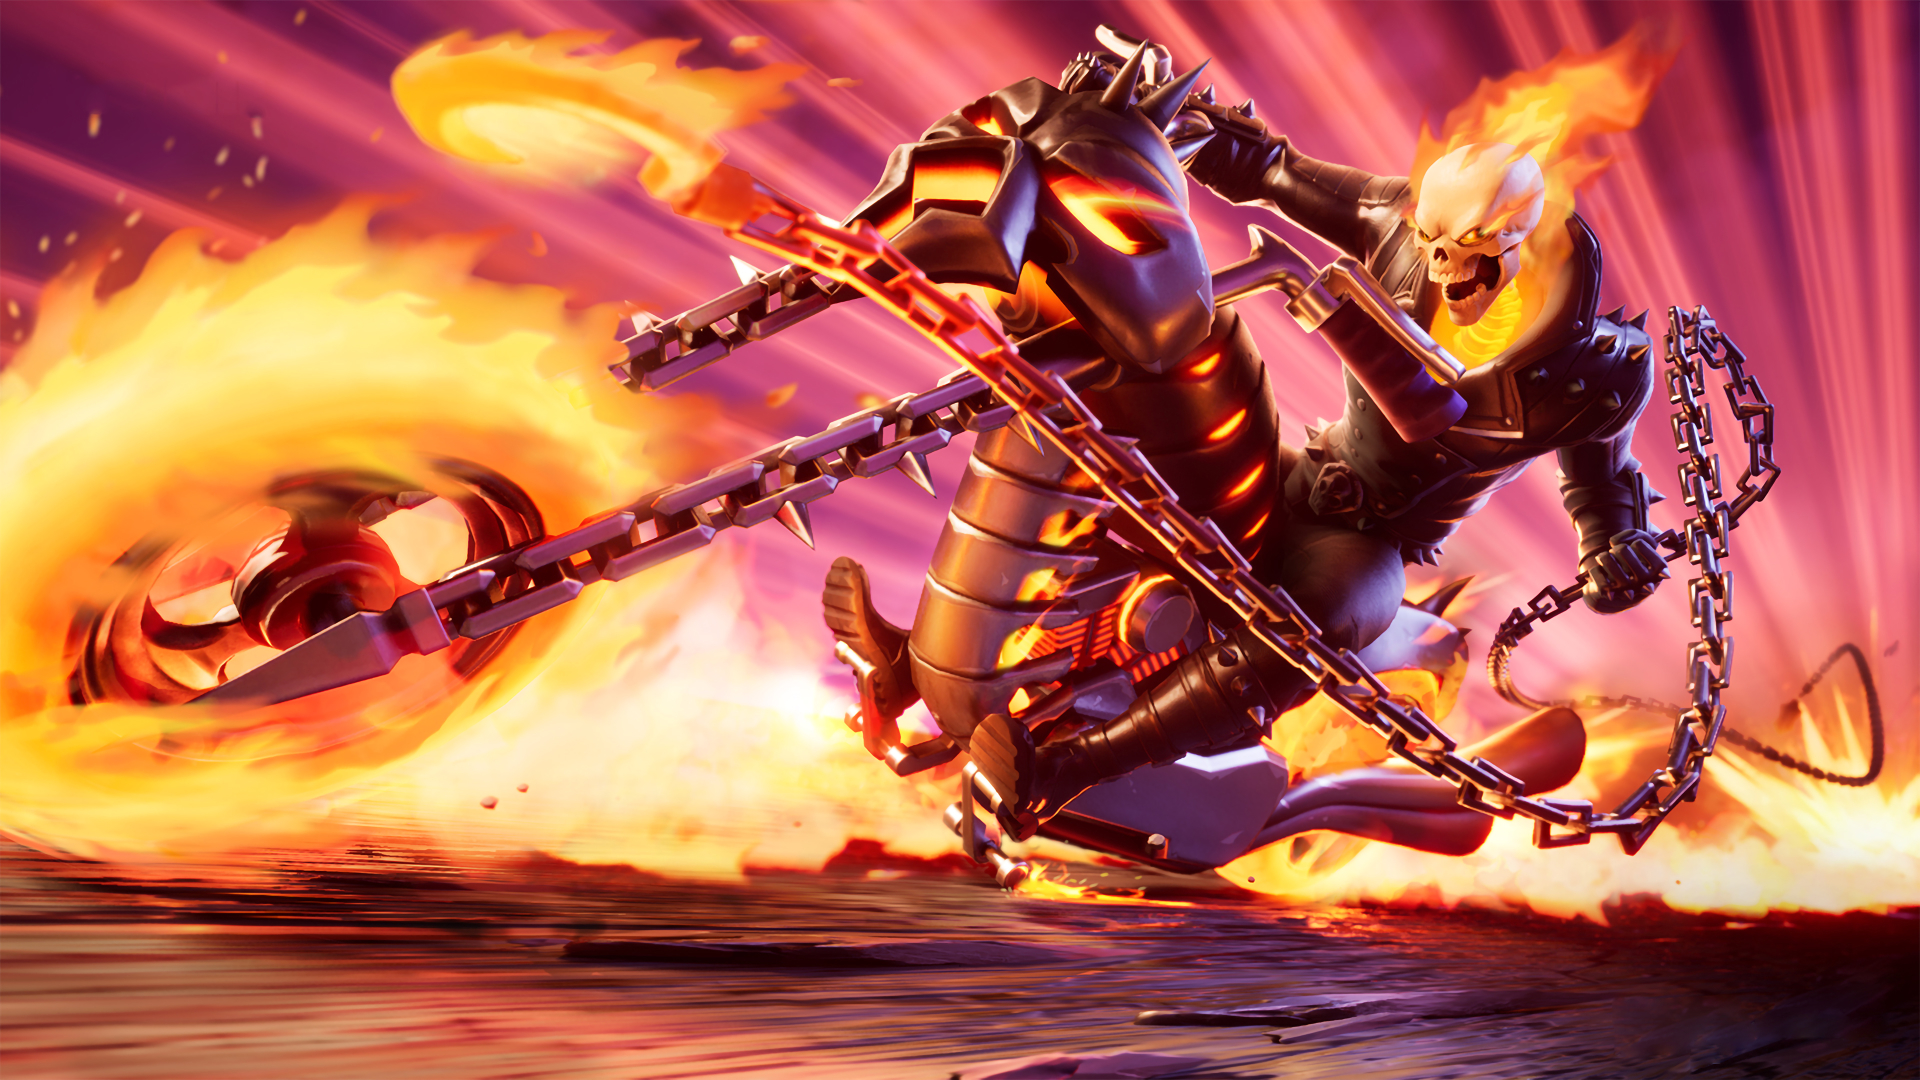 Ghost Rider 4K Fortnite Wallpaper, HD Games 4K Wallpapers, Images